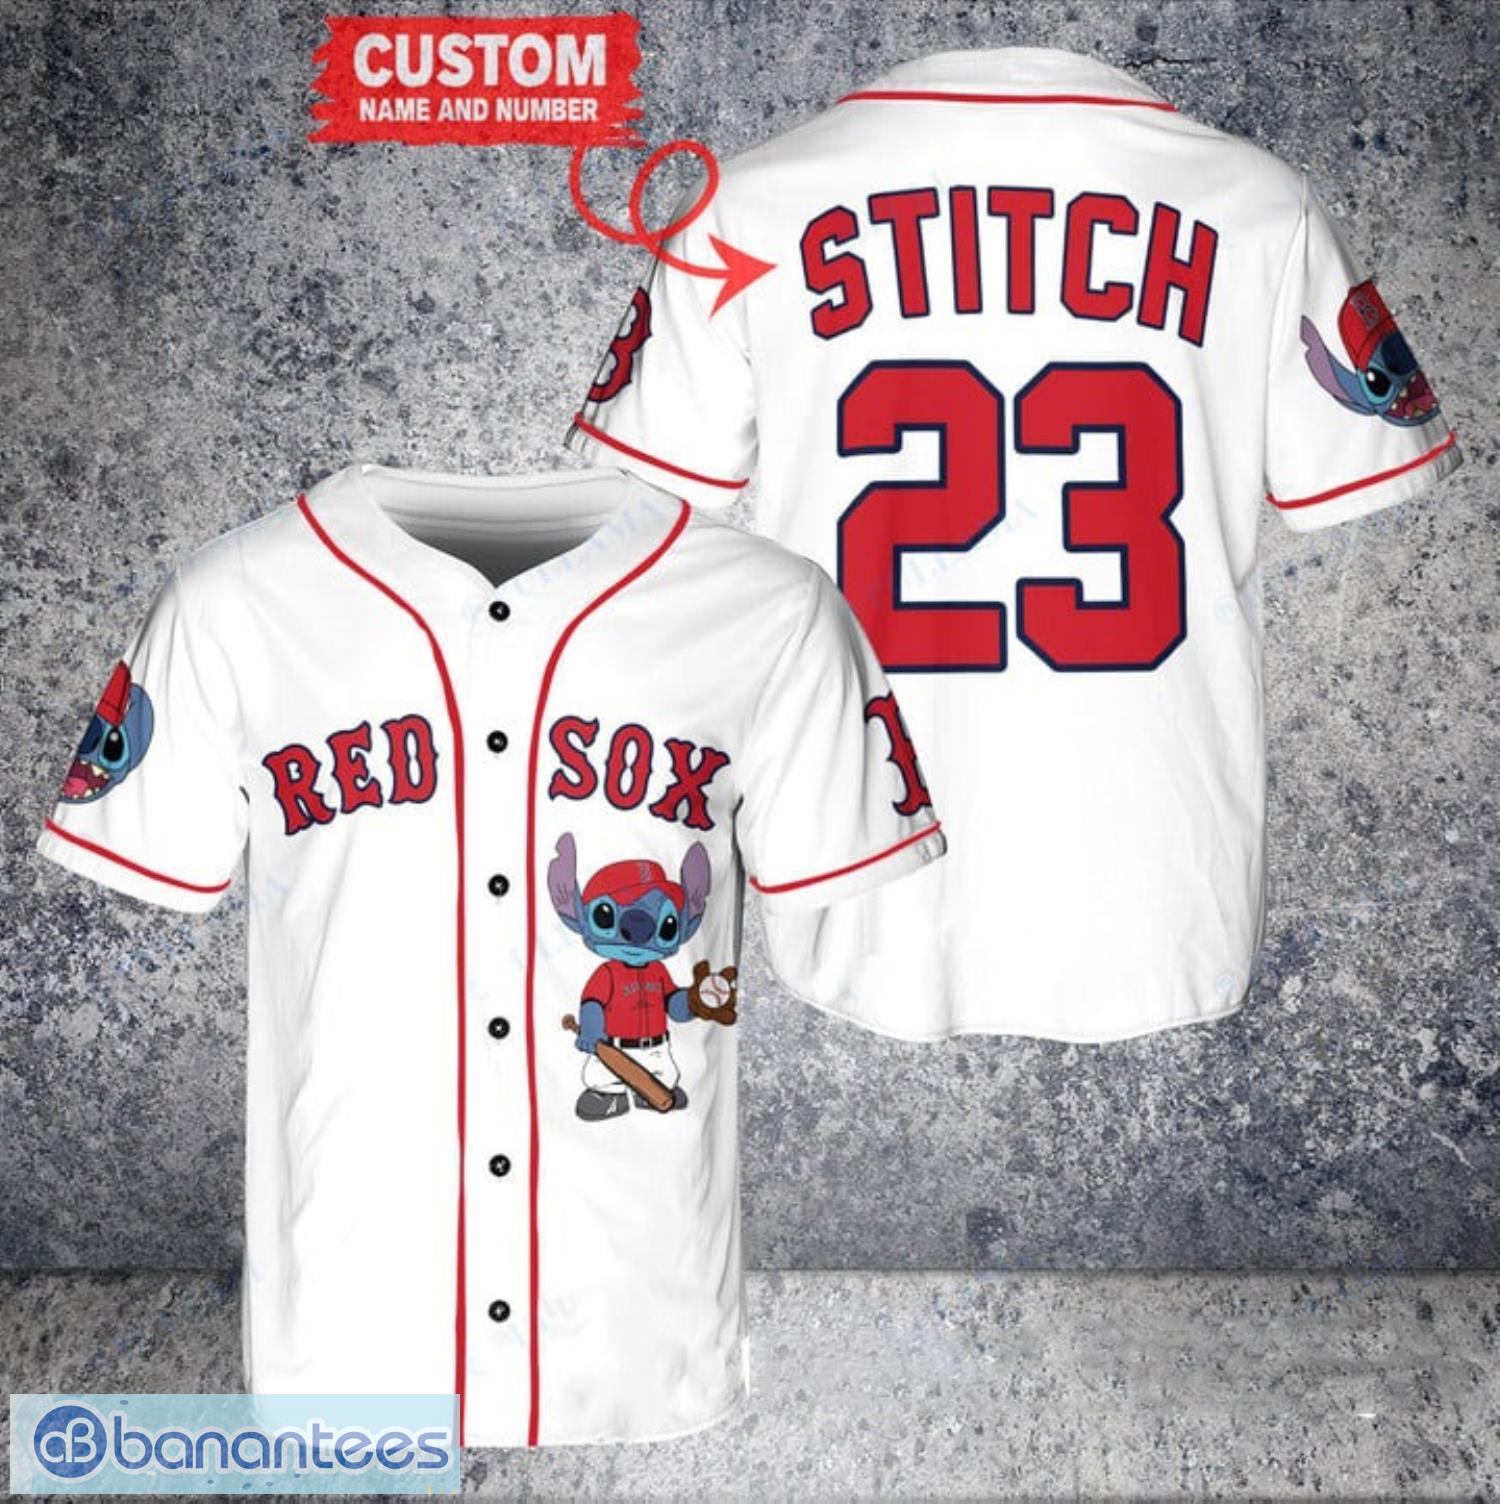 Boston Red Sox MLB Baseball Jersey Shirt Custom Name And Number